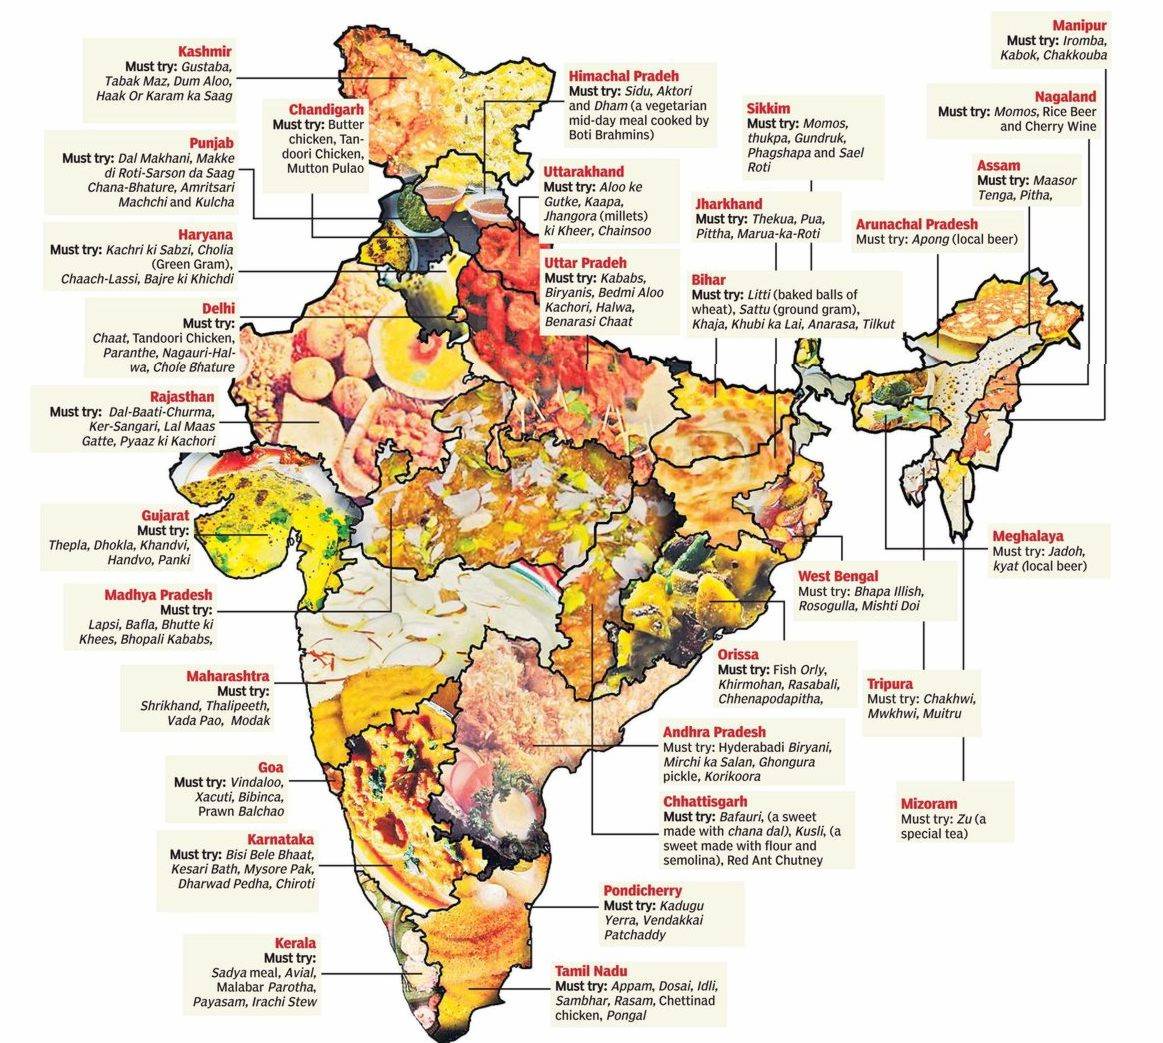 Indian Cuisine Region Wise - Must try Indian food in each region